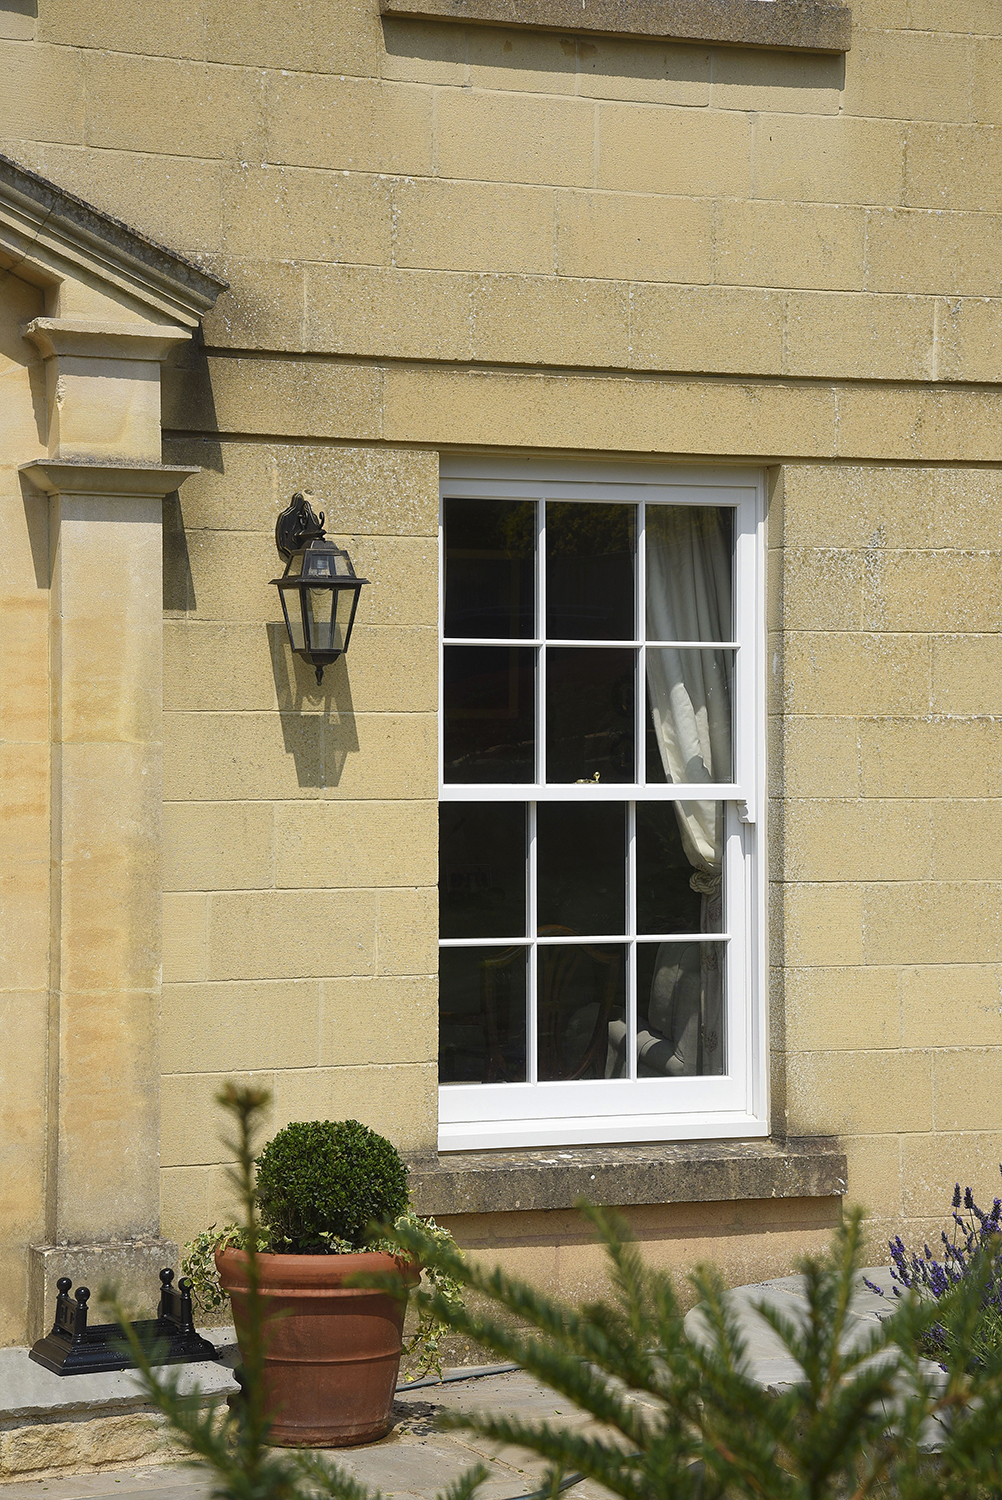 Mumford & Wood install sash windows to suit stone architecture